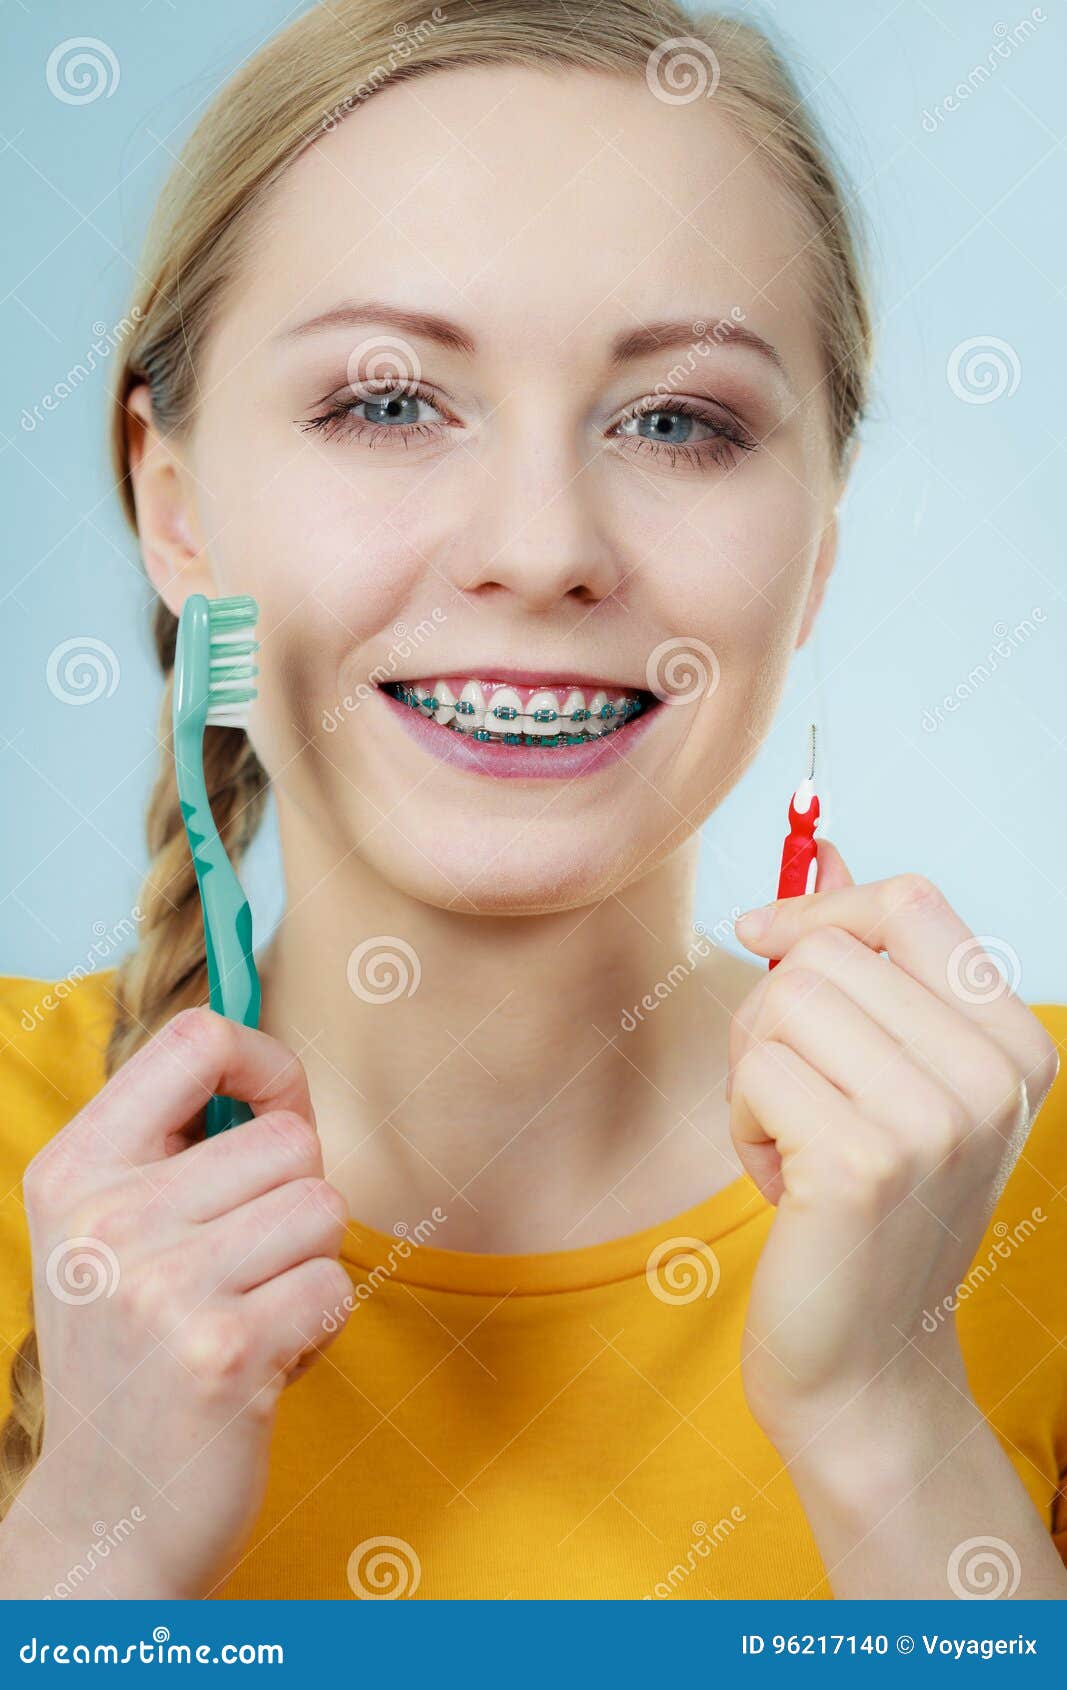 Girl With Teeth Braces Using I